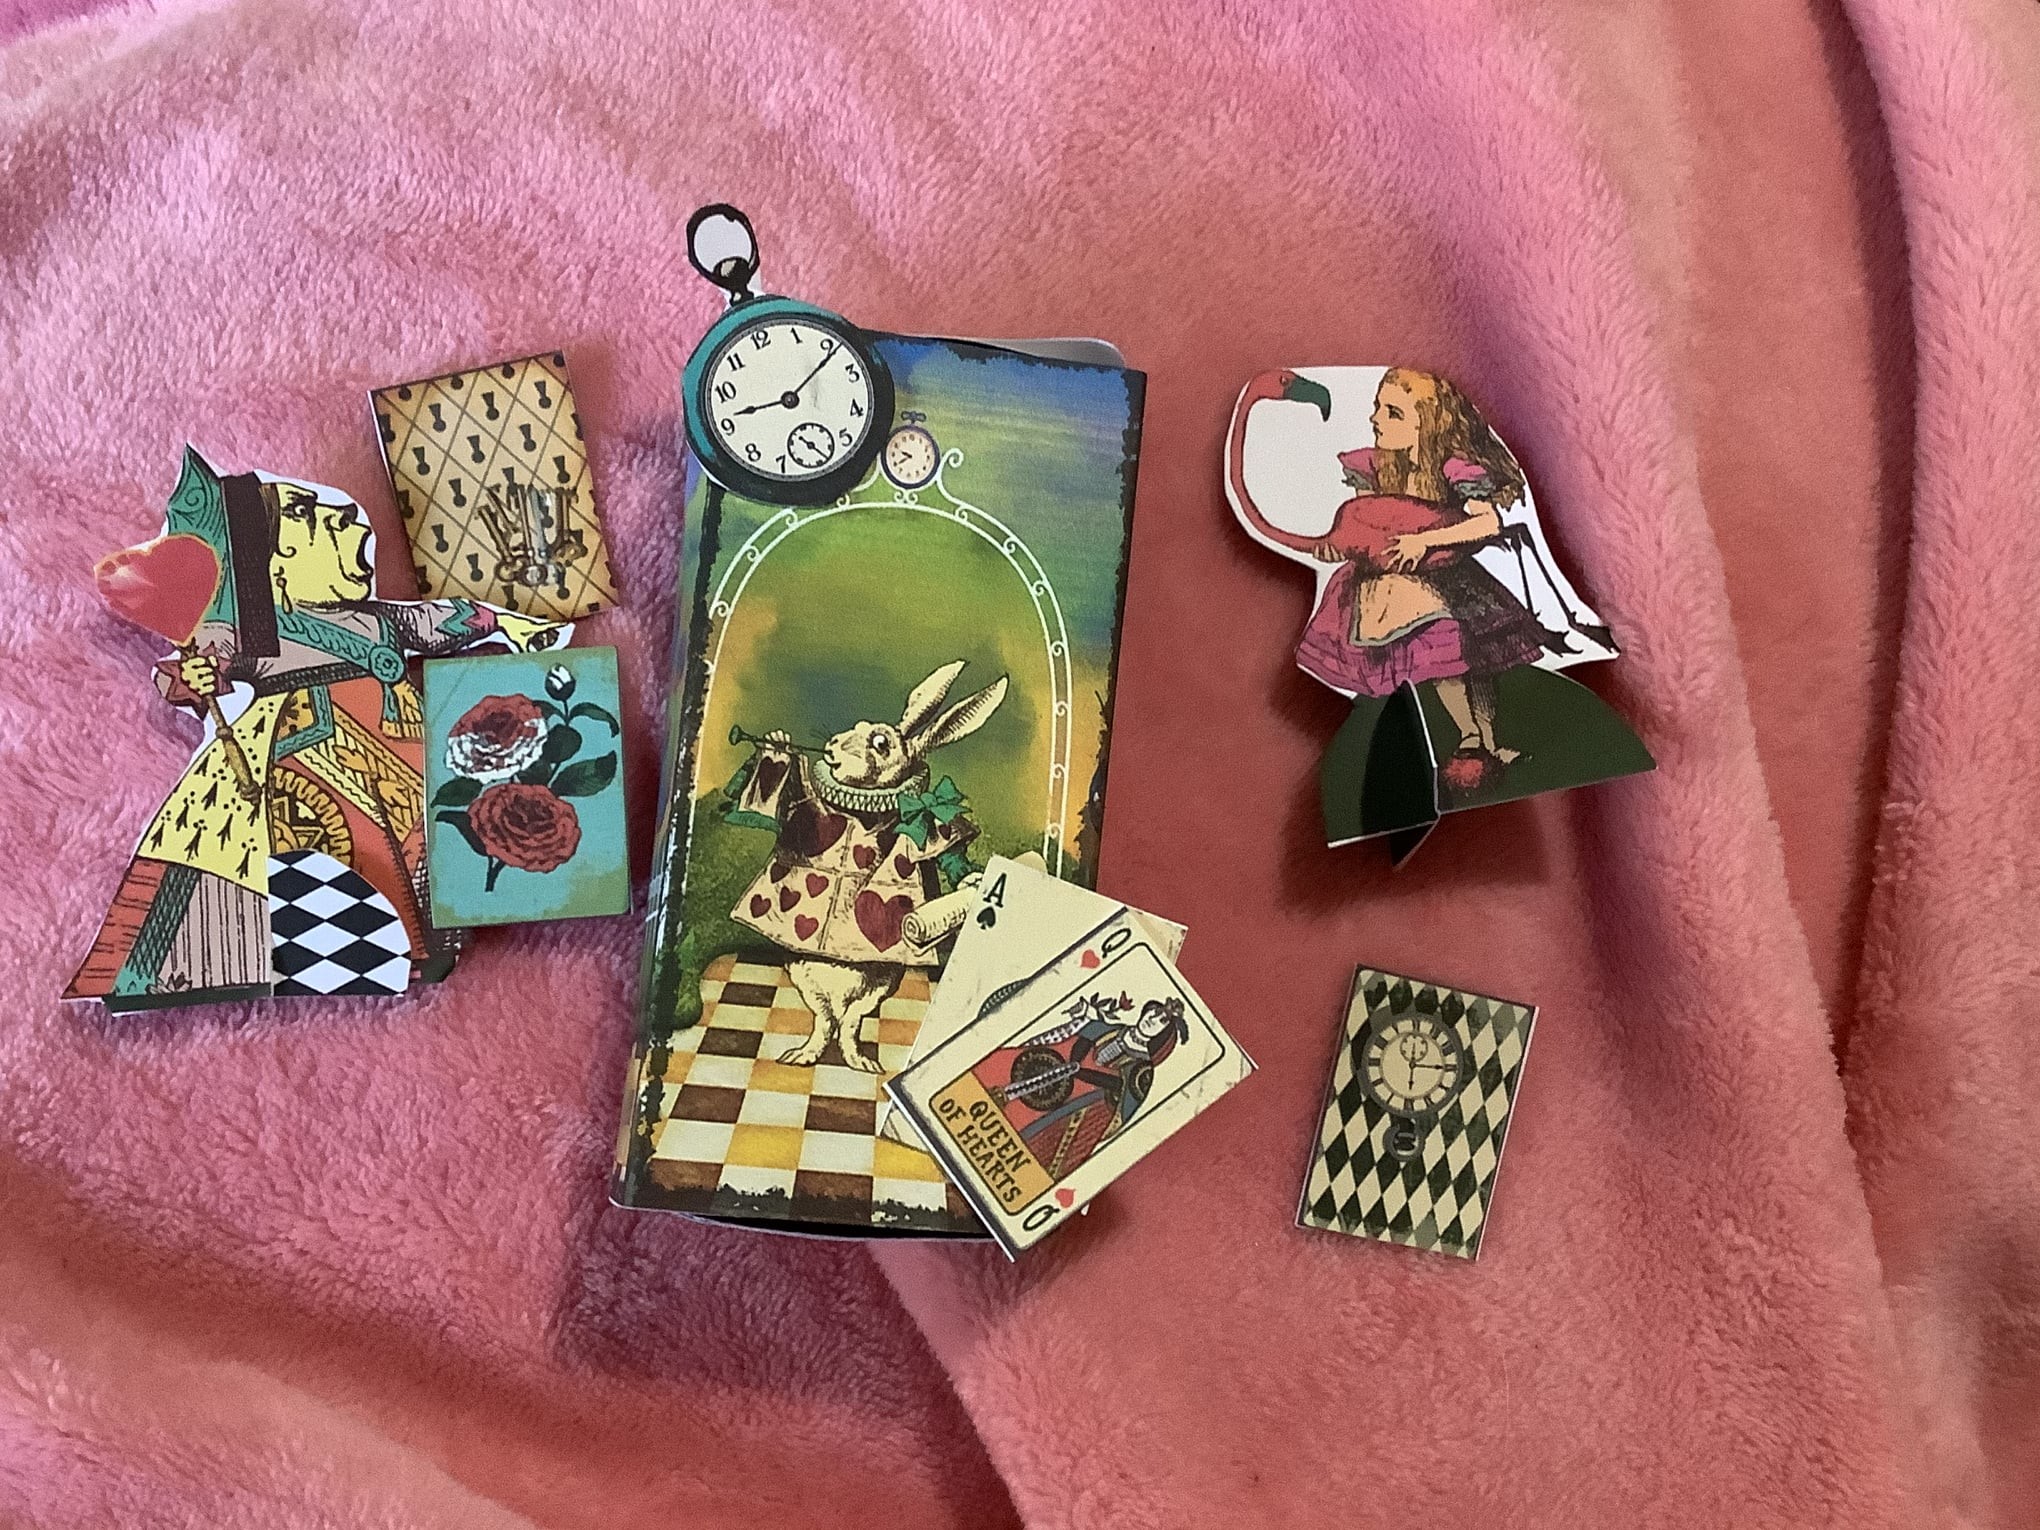 15 Amazing Alice in Wonderland Crafts